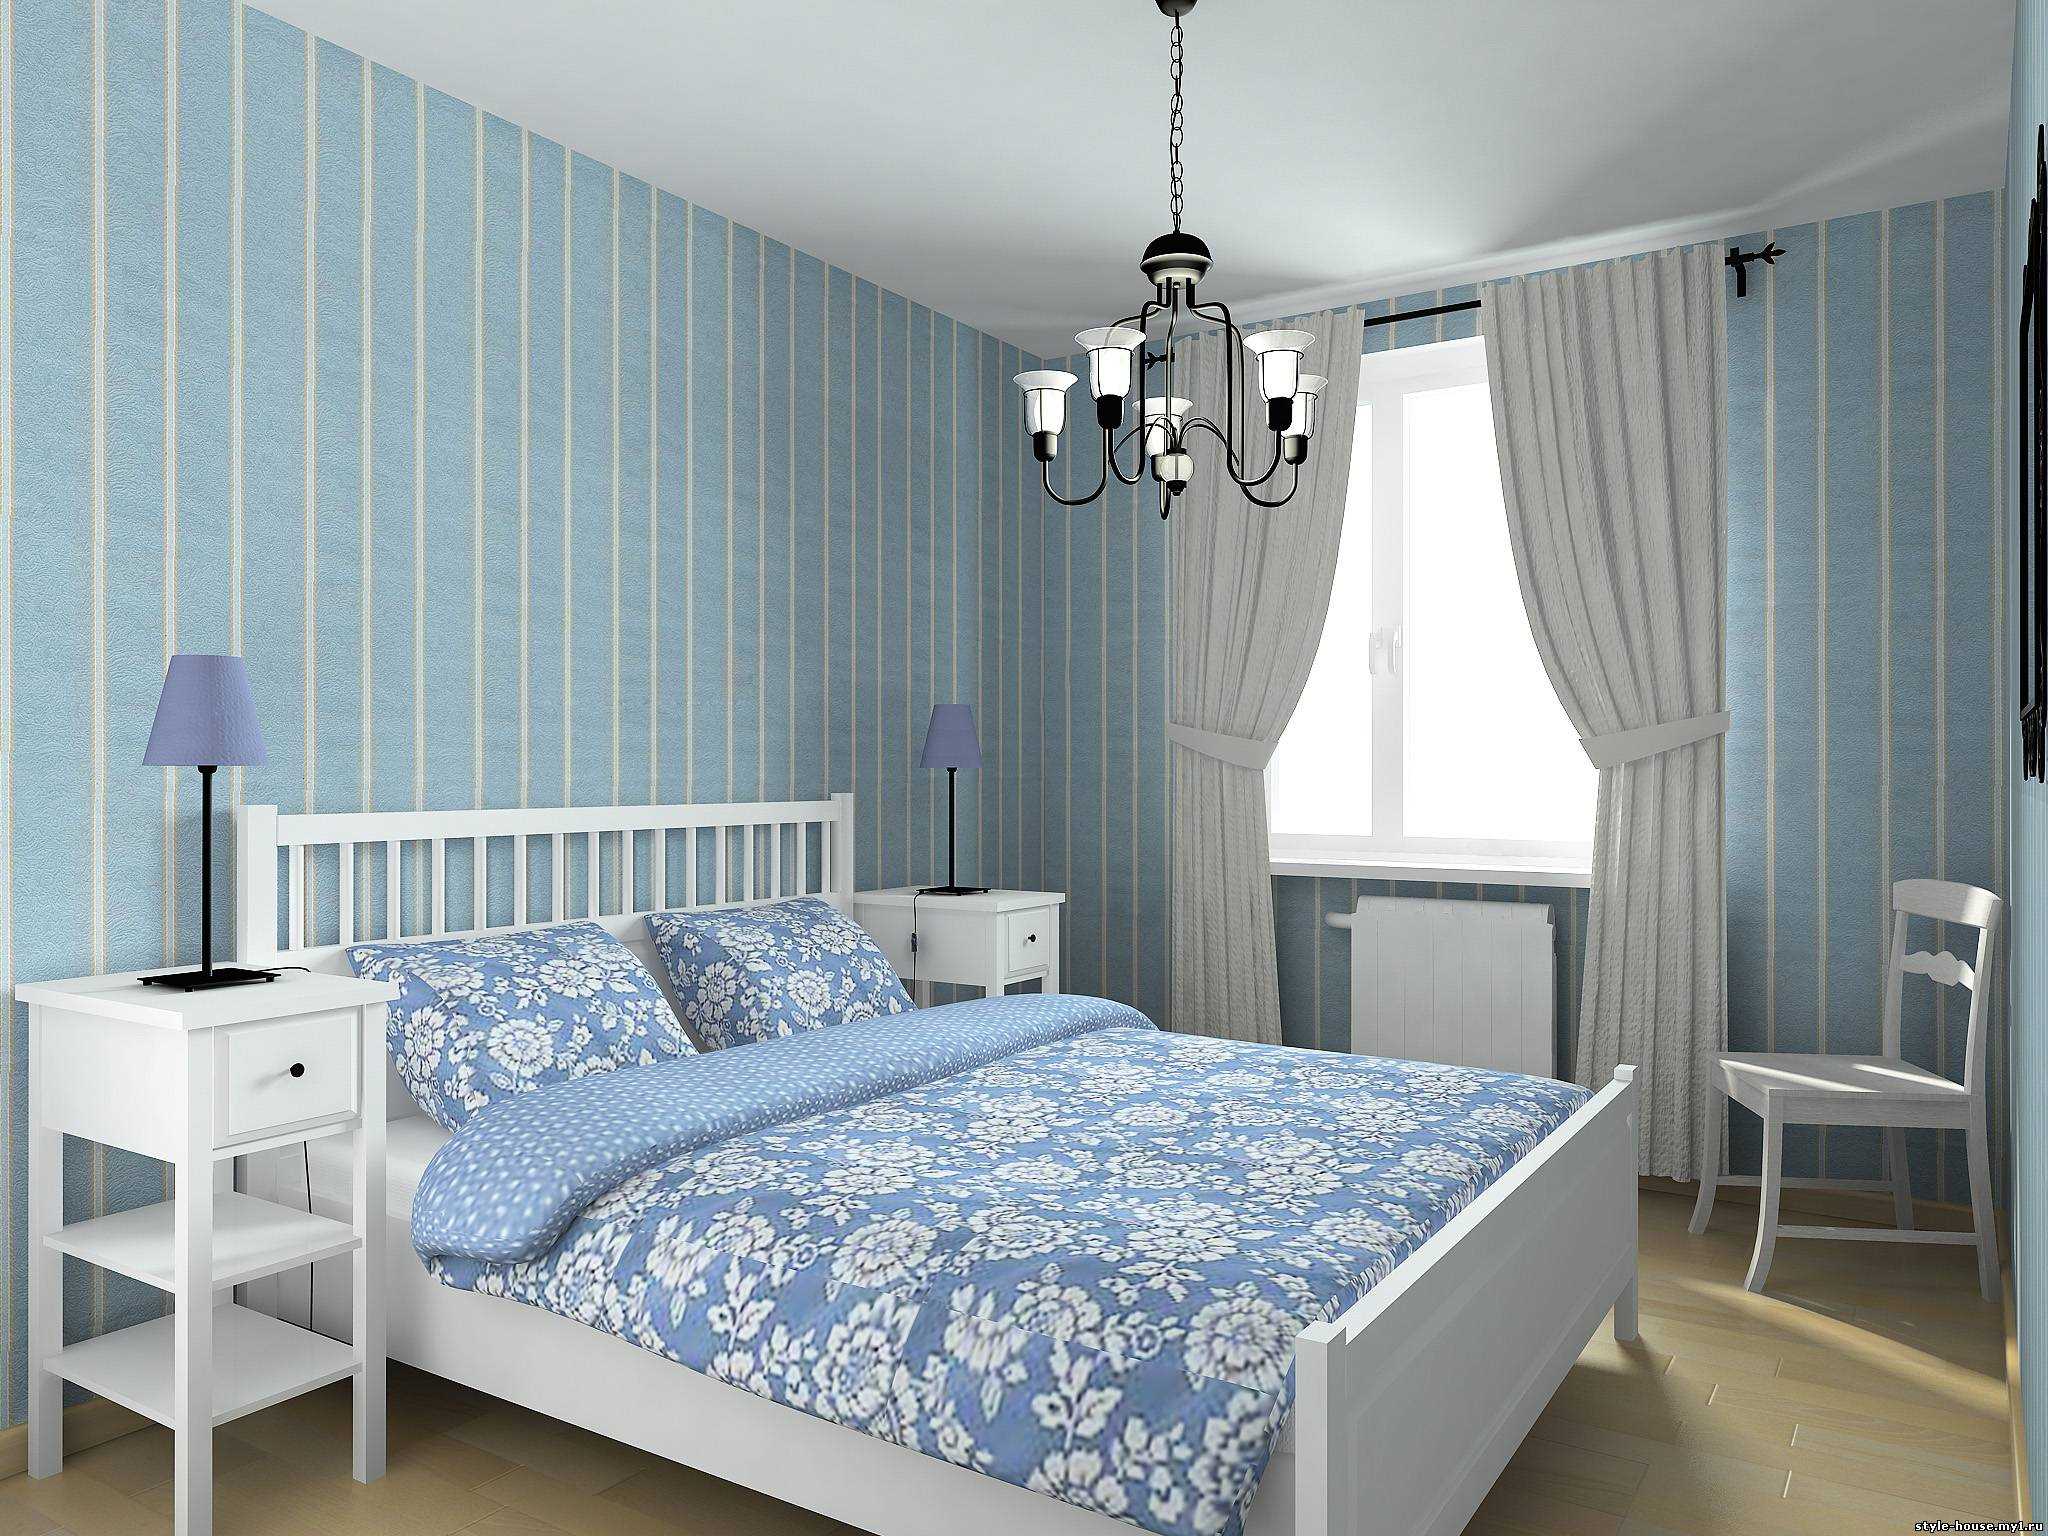 the idea of ​​using bright blue in room design